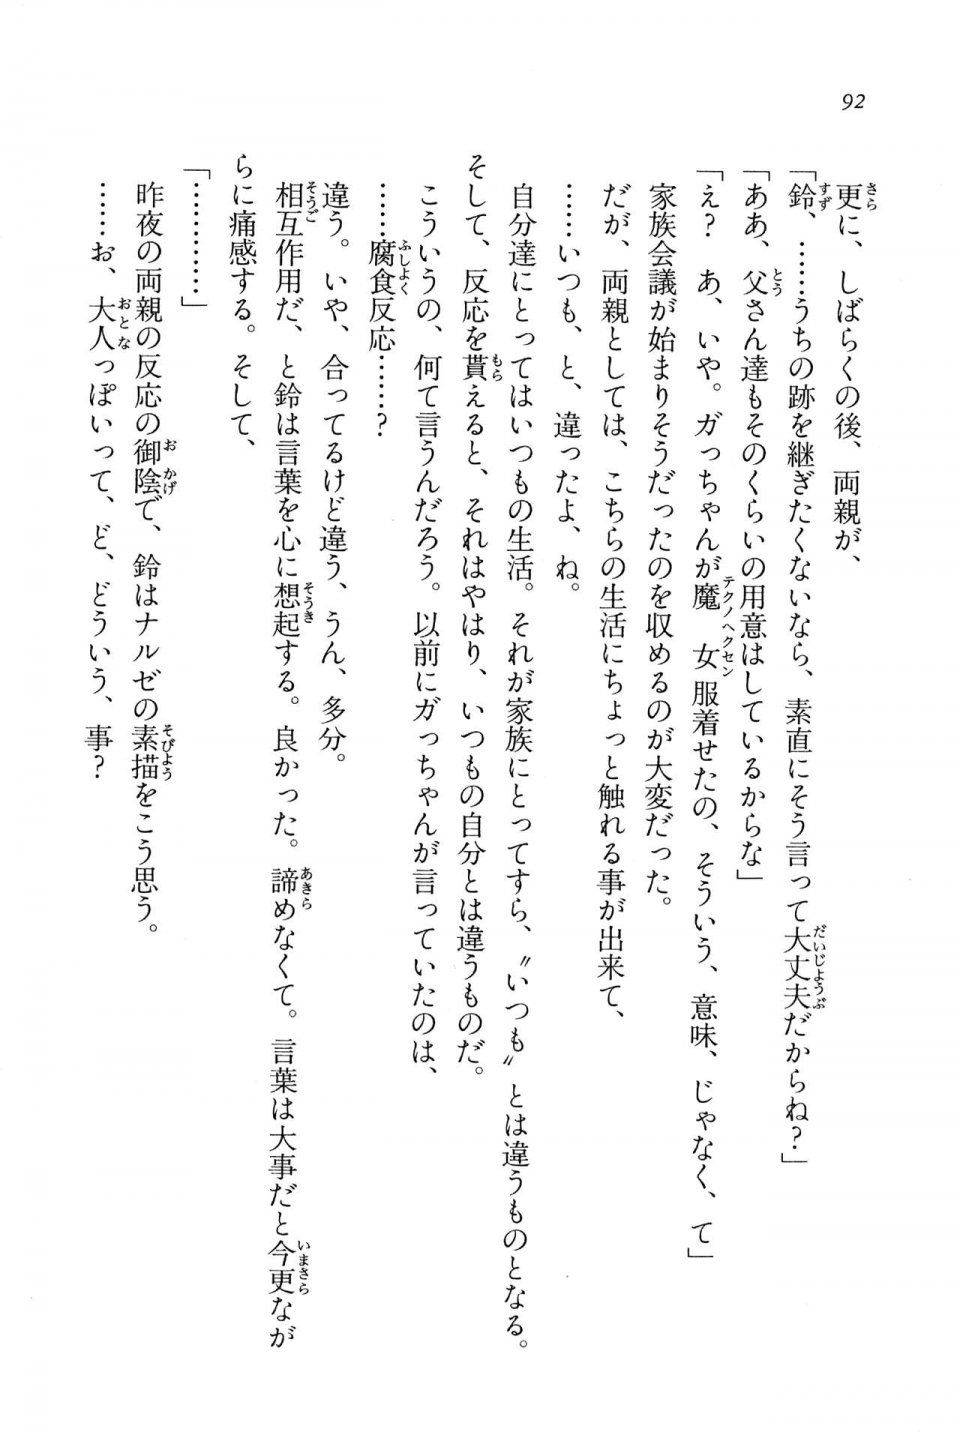 Kyoukai Senjou no Horizon BD Special Mininovel Vol 5(3A) - Photo #96